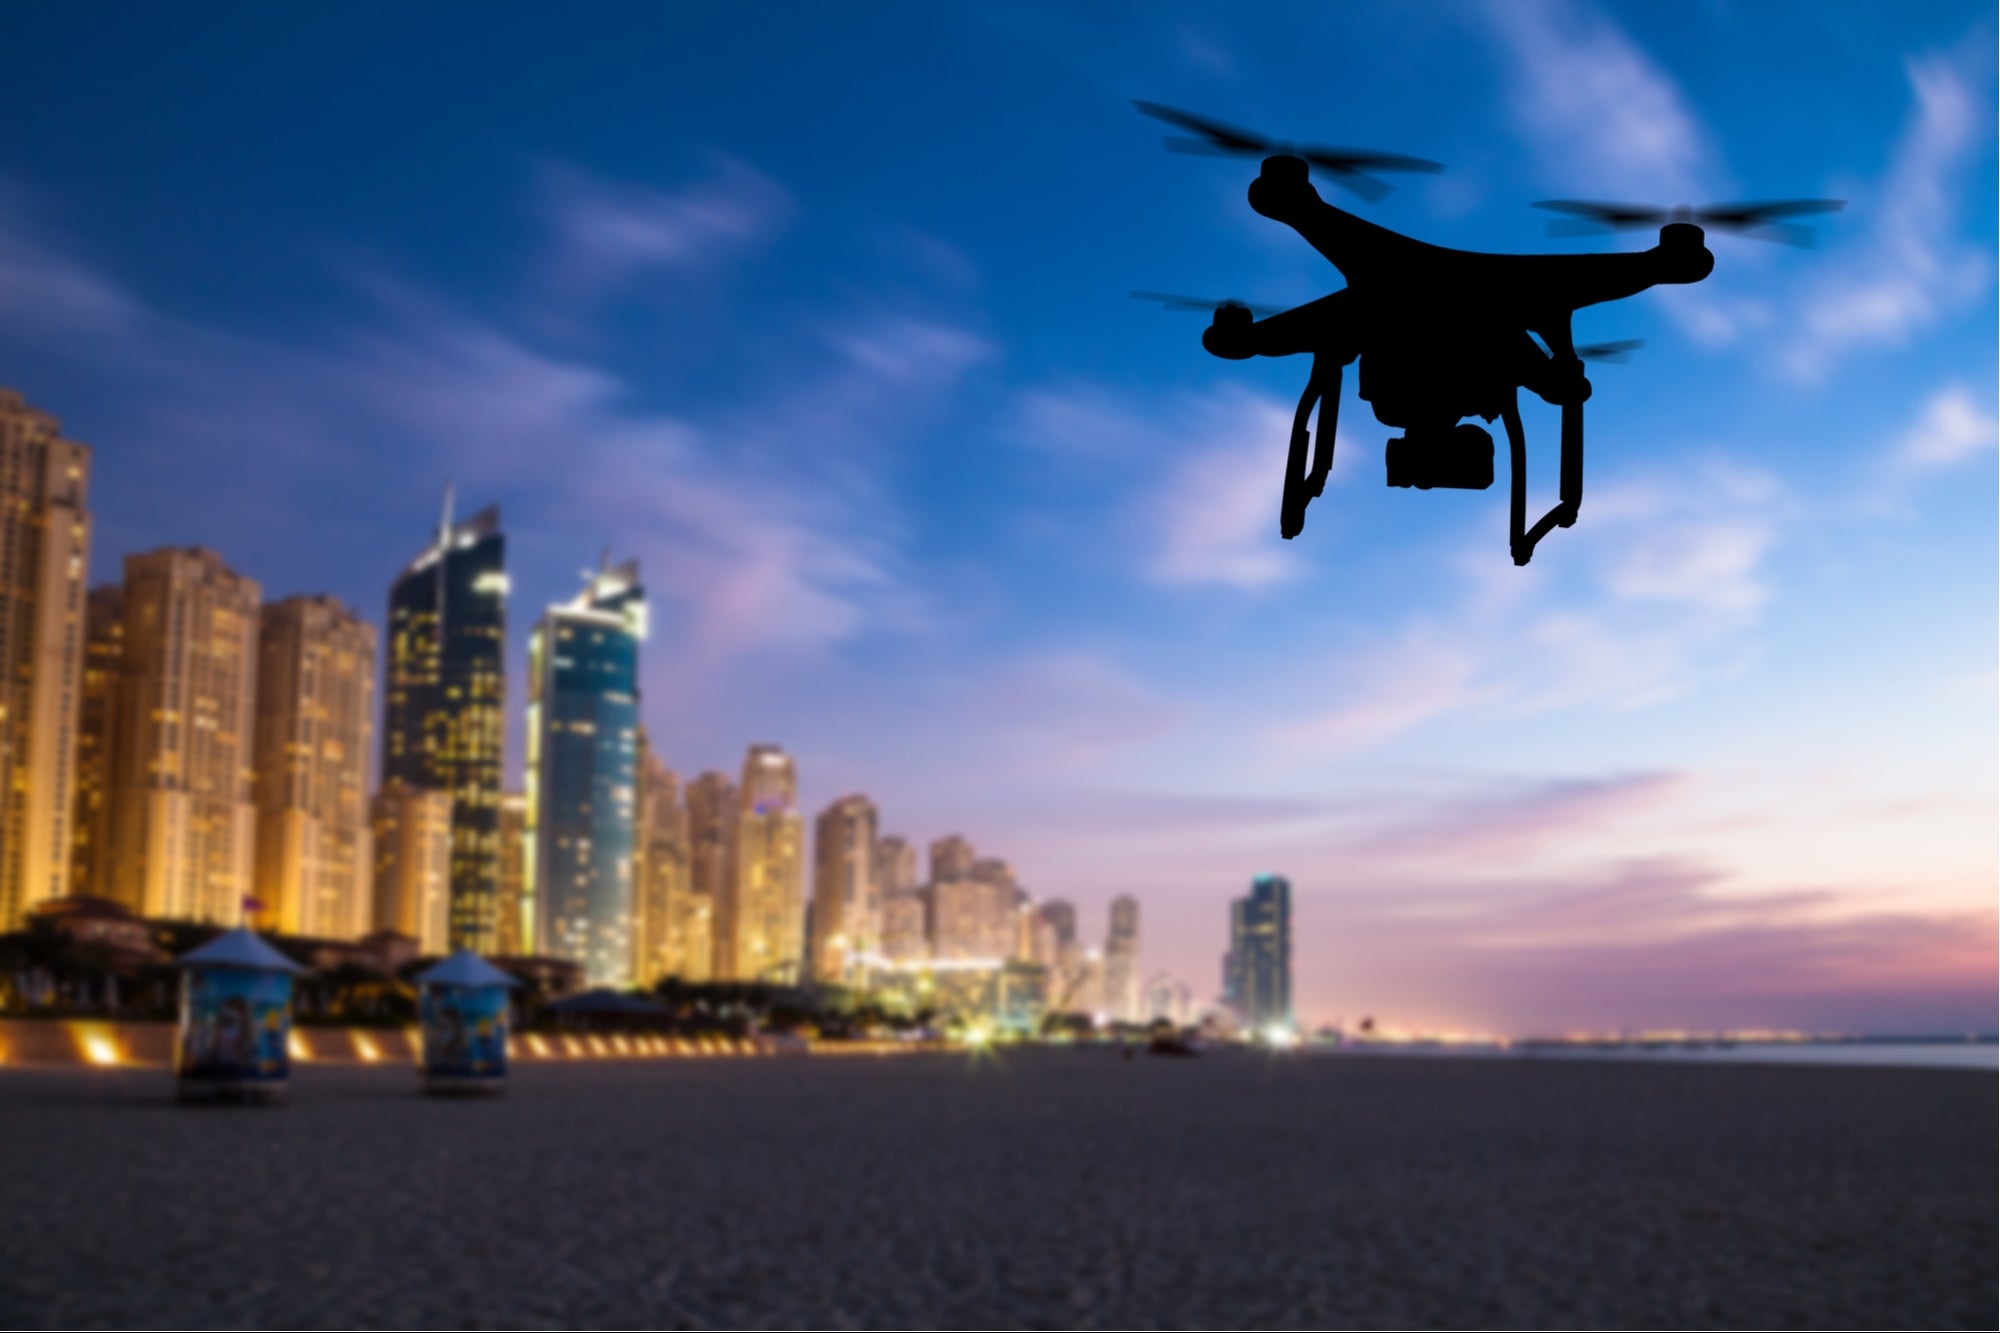 Drone technology in UAE